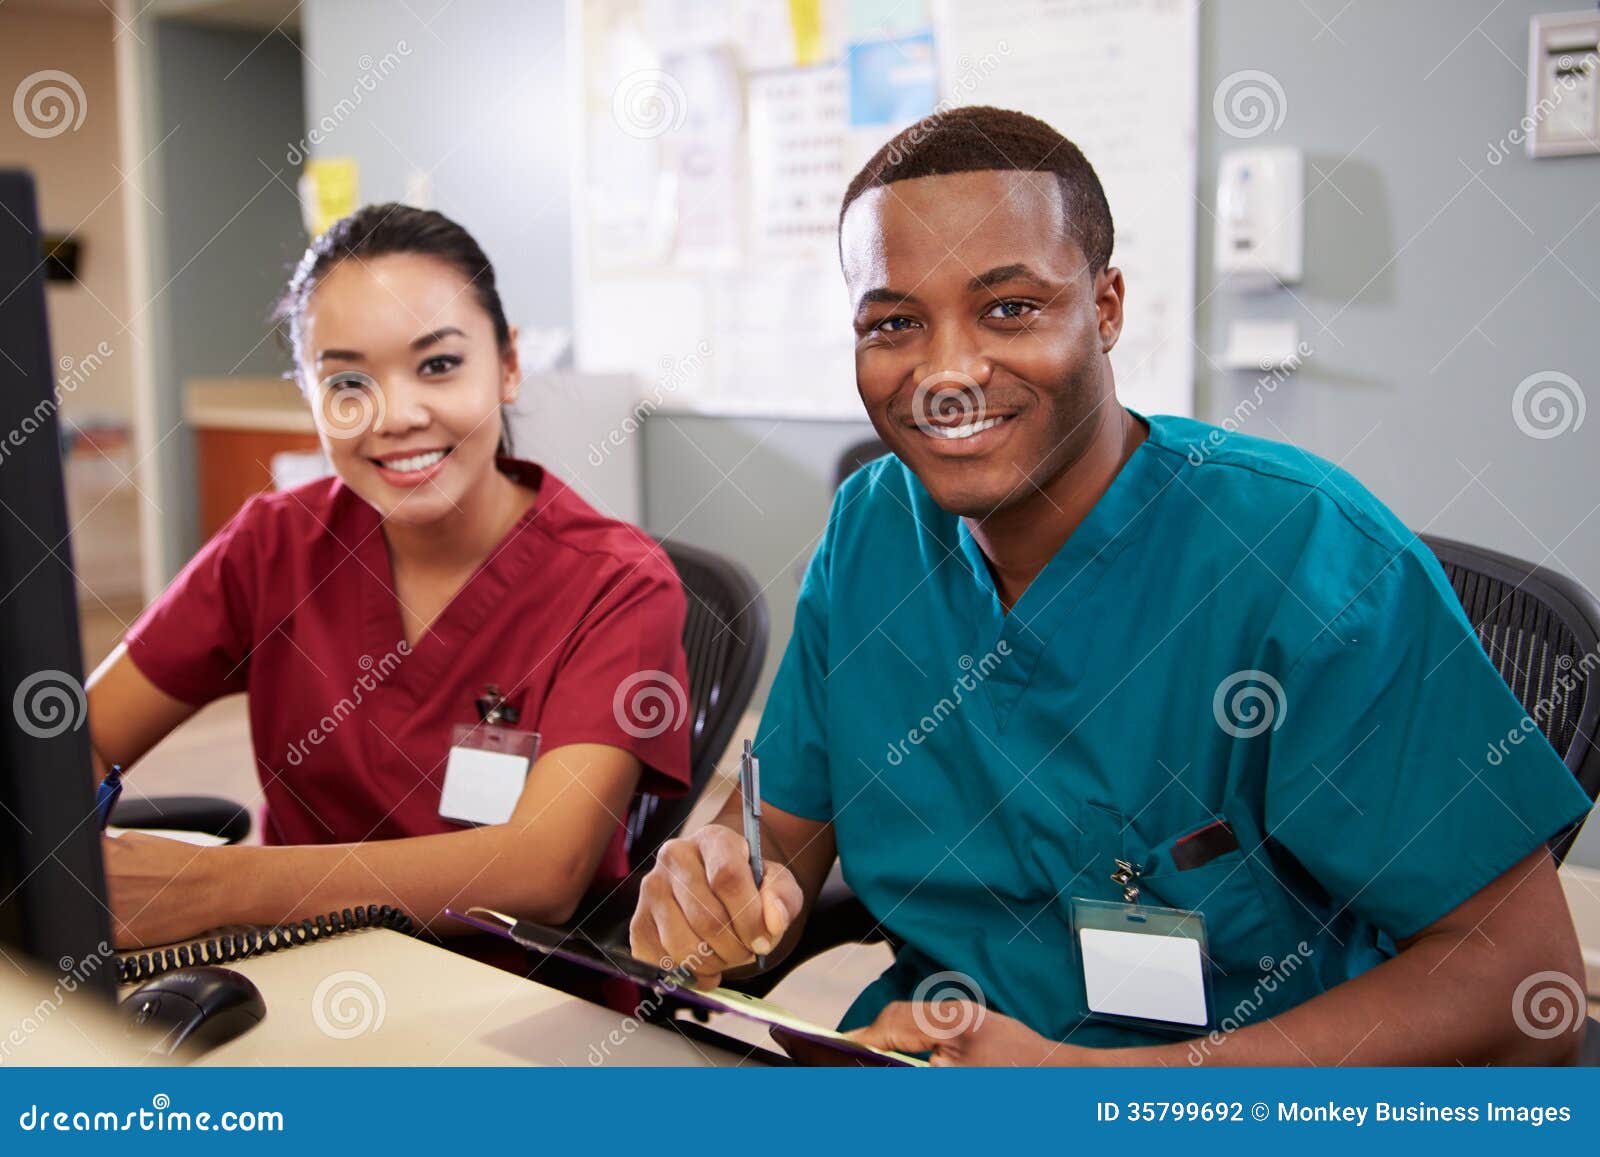 male and female nurse working at nurses station